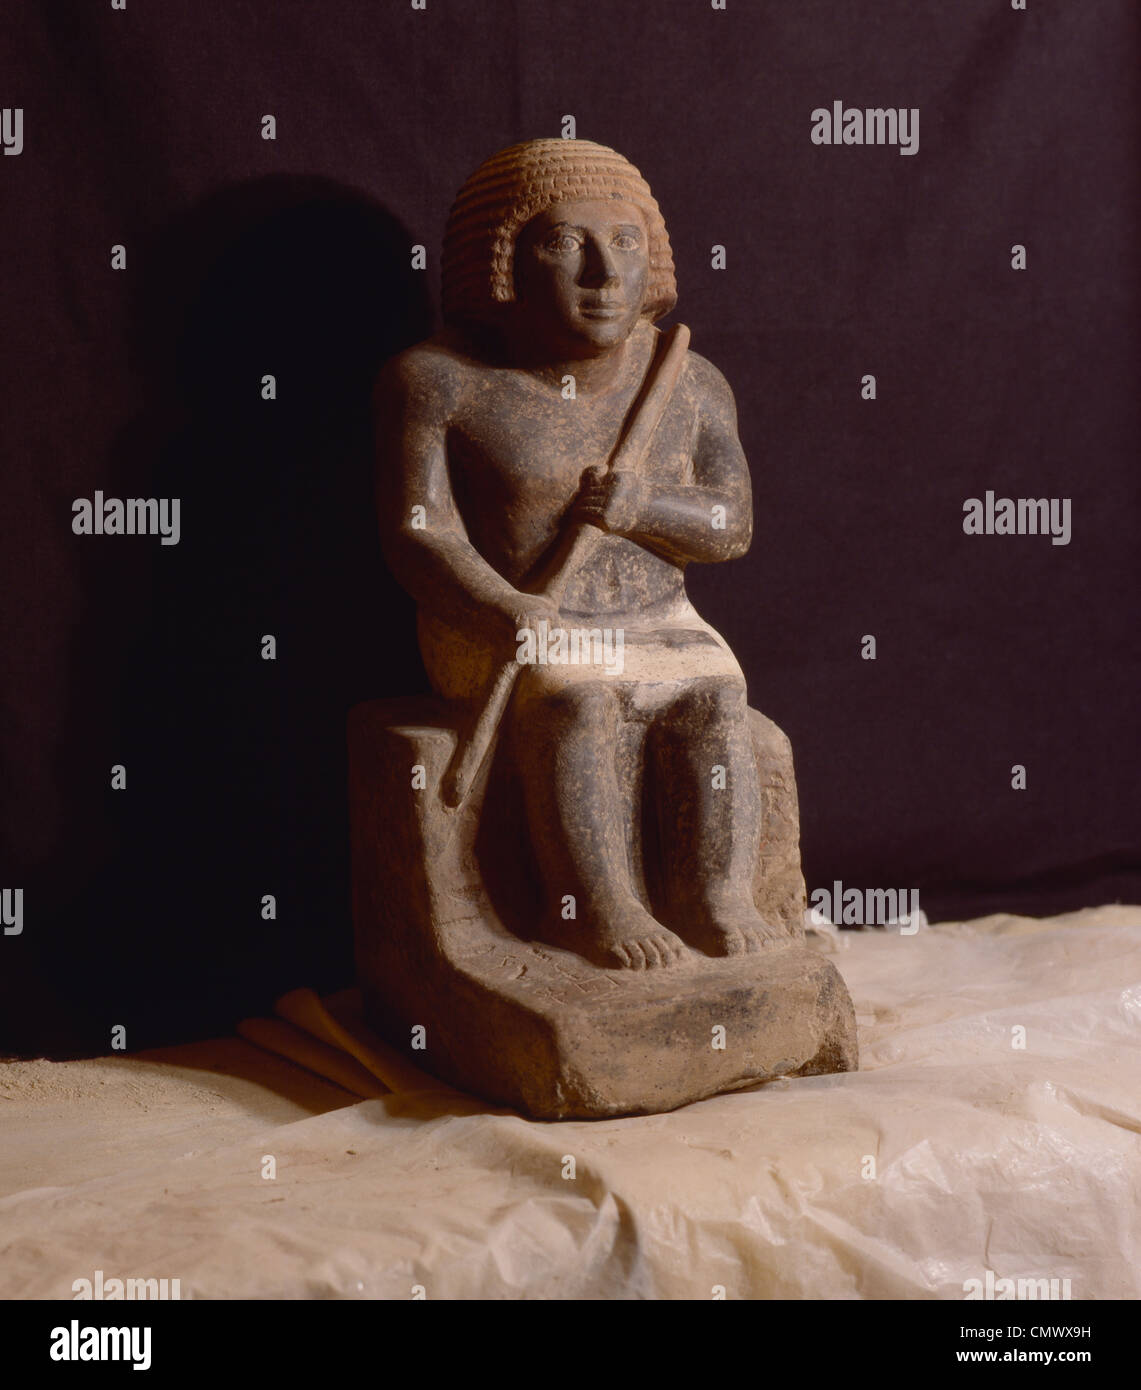 The Dwarf Perniankhu, 4th Dynasty, Old Kingdom, Basalt, Egyptian Museum, Cairo, Ground Floor, Room 42, JE 98944, H: 48cm Stock Photo